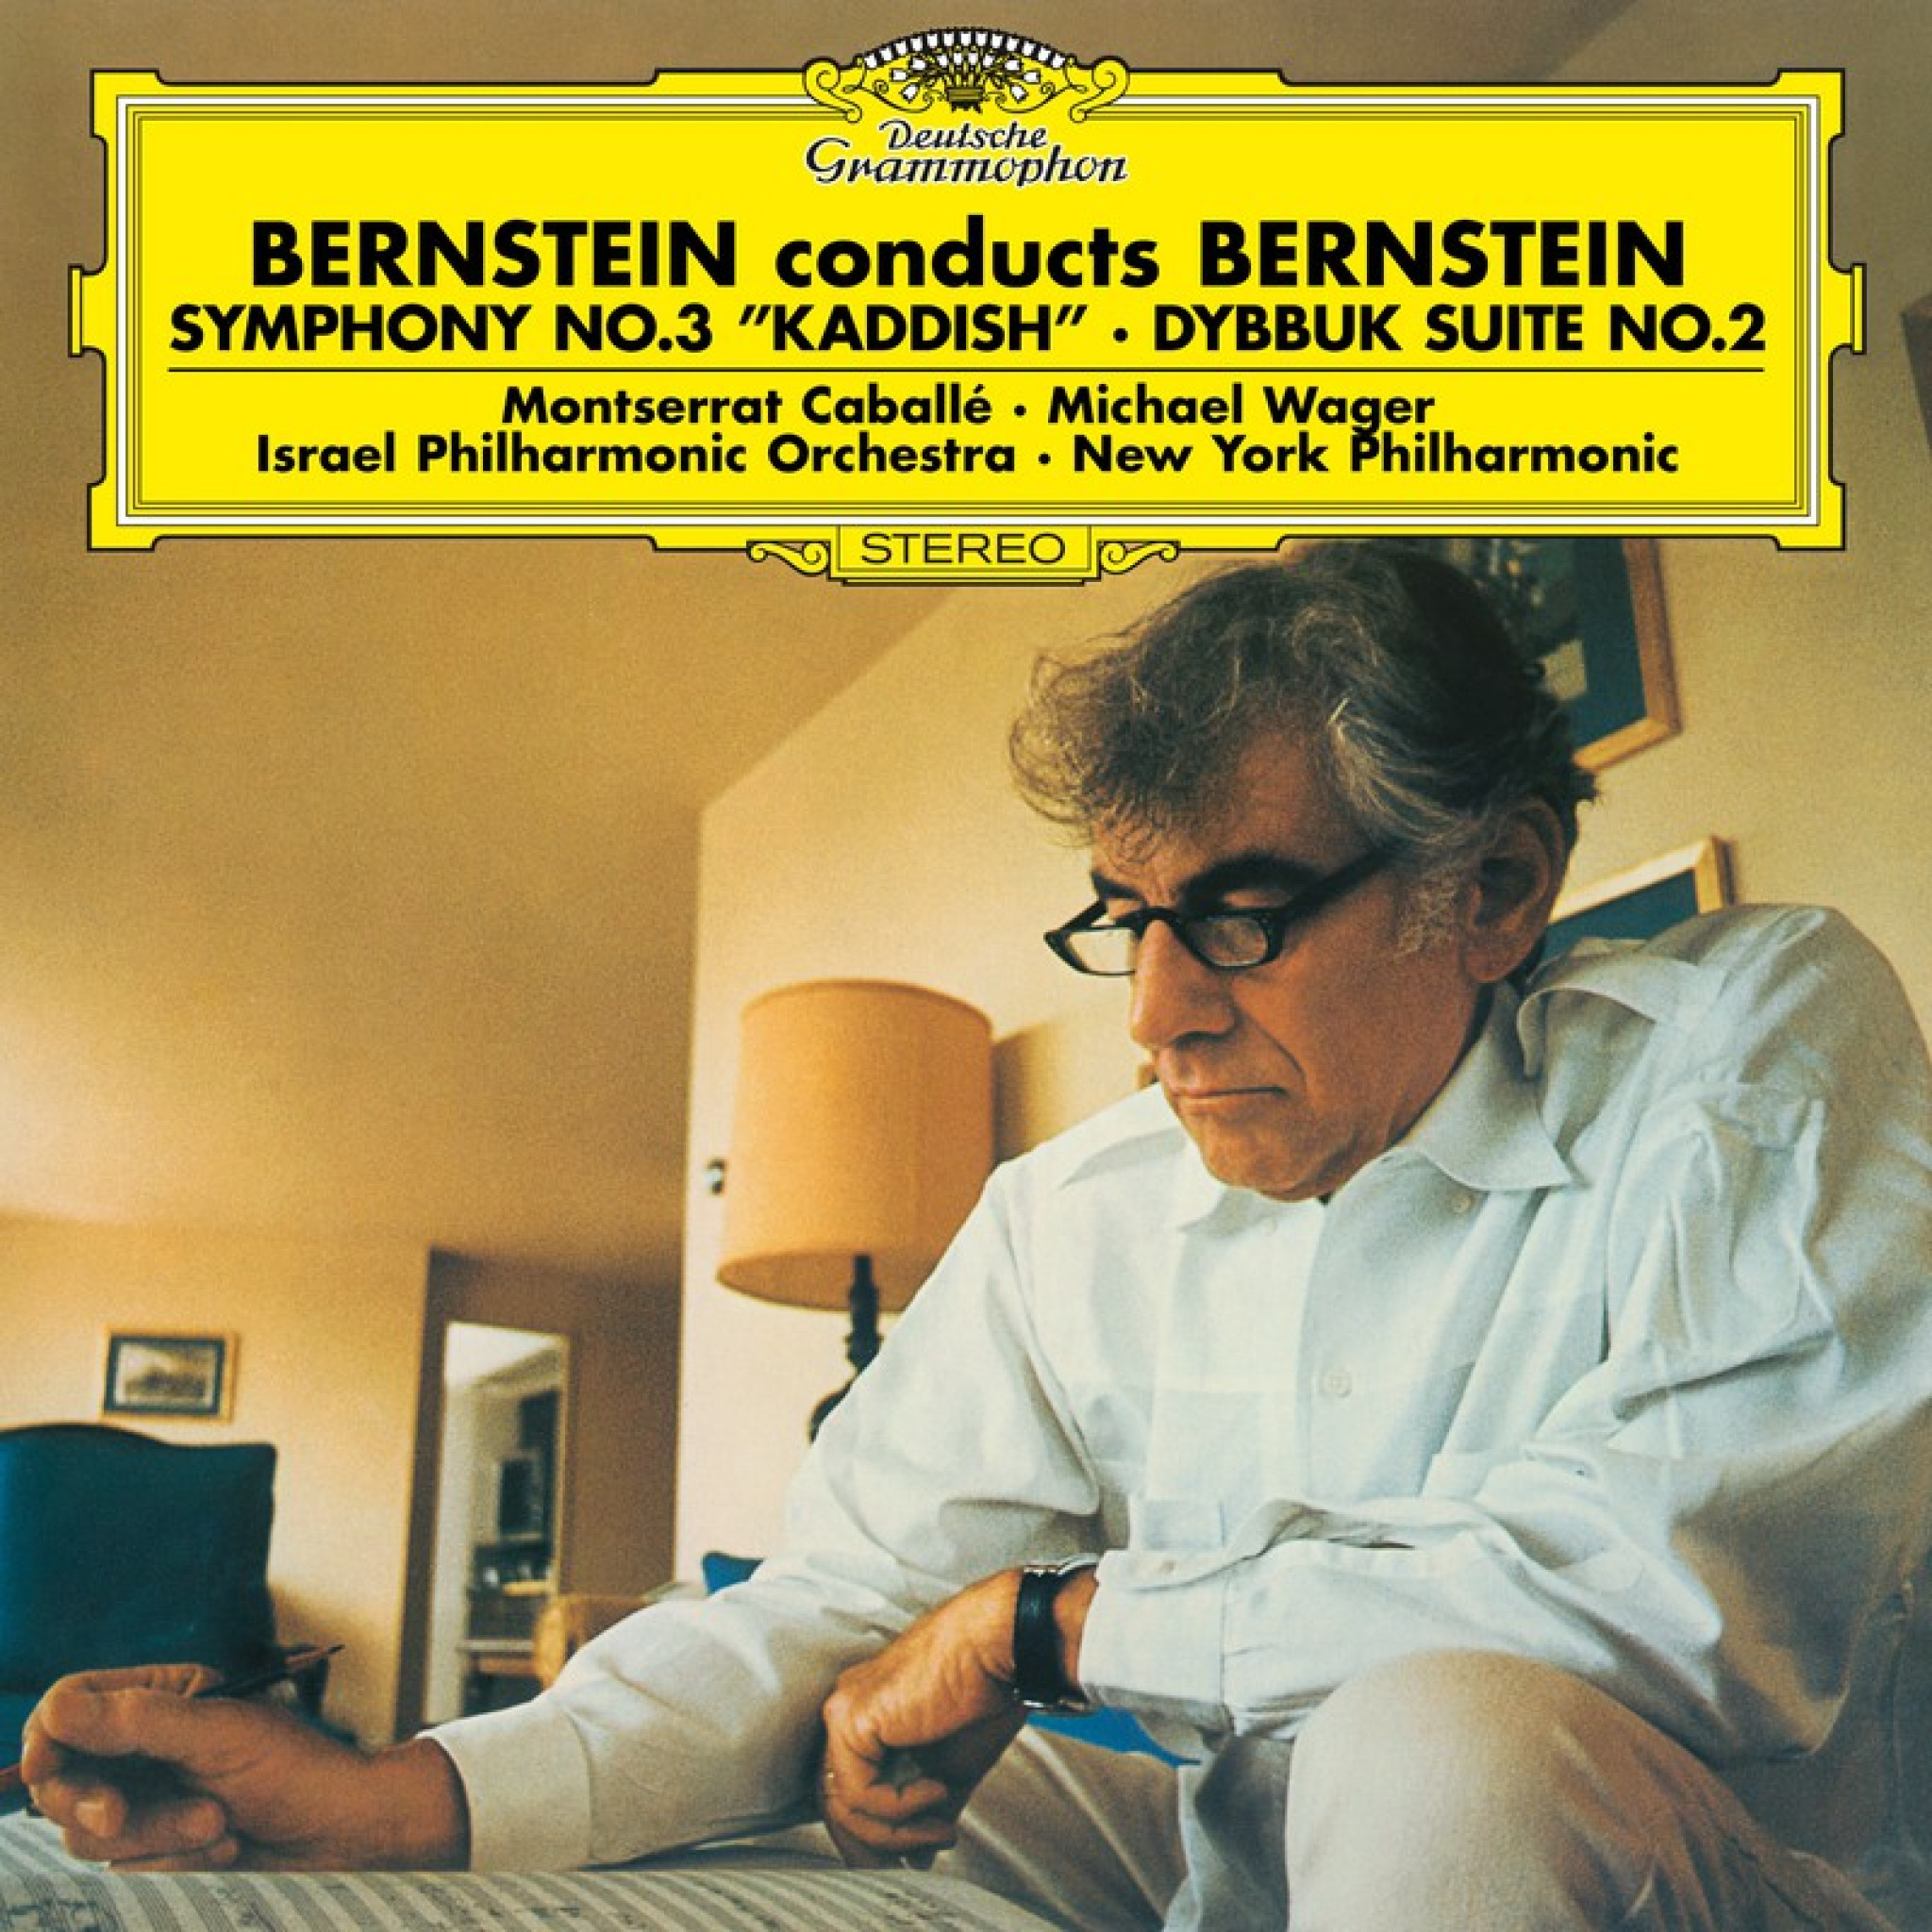 BERNSTEIN Symphony No. 3, Dybbuk Suite